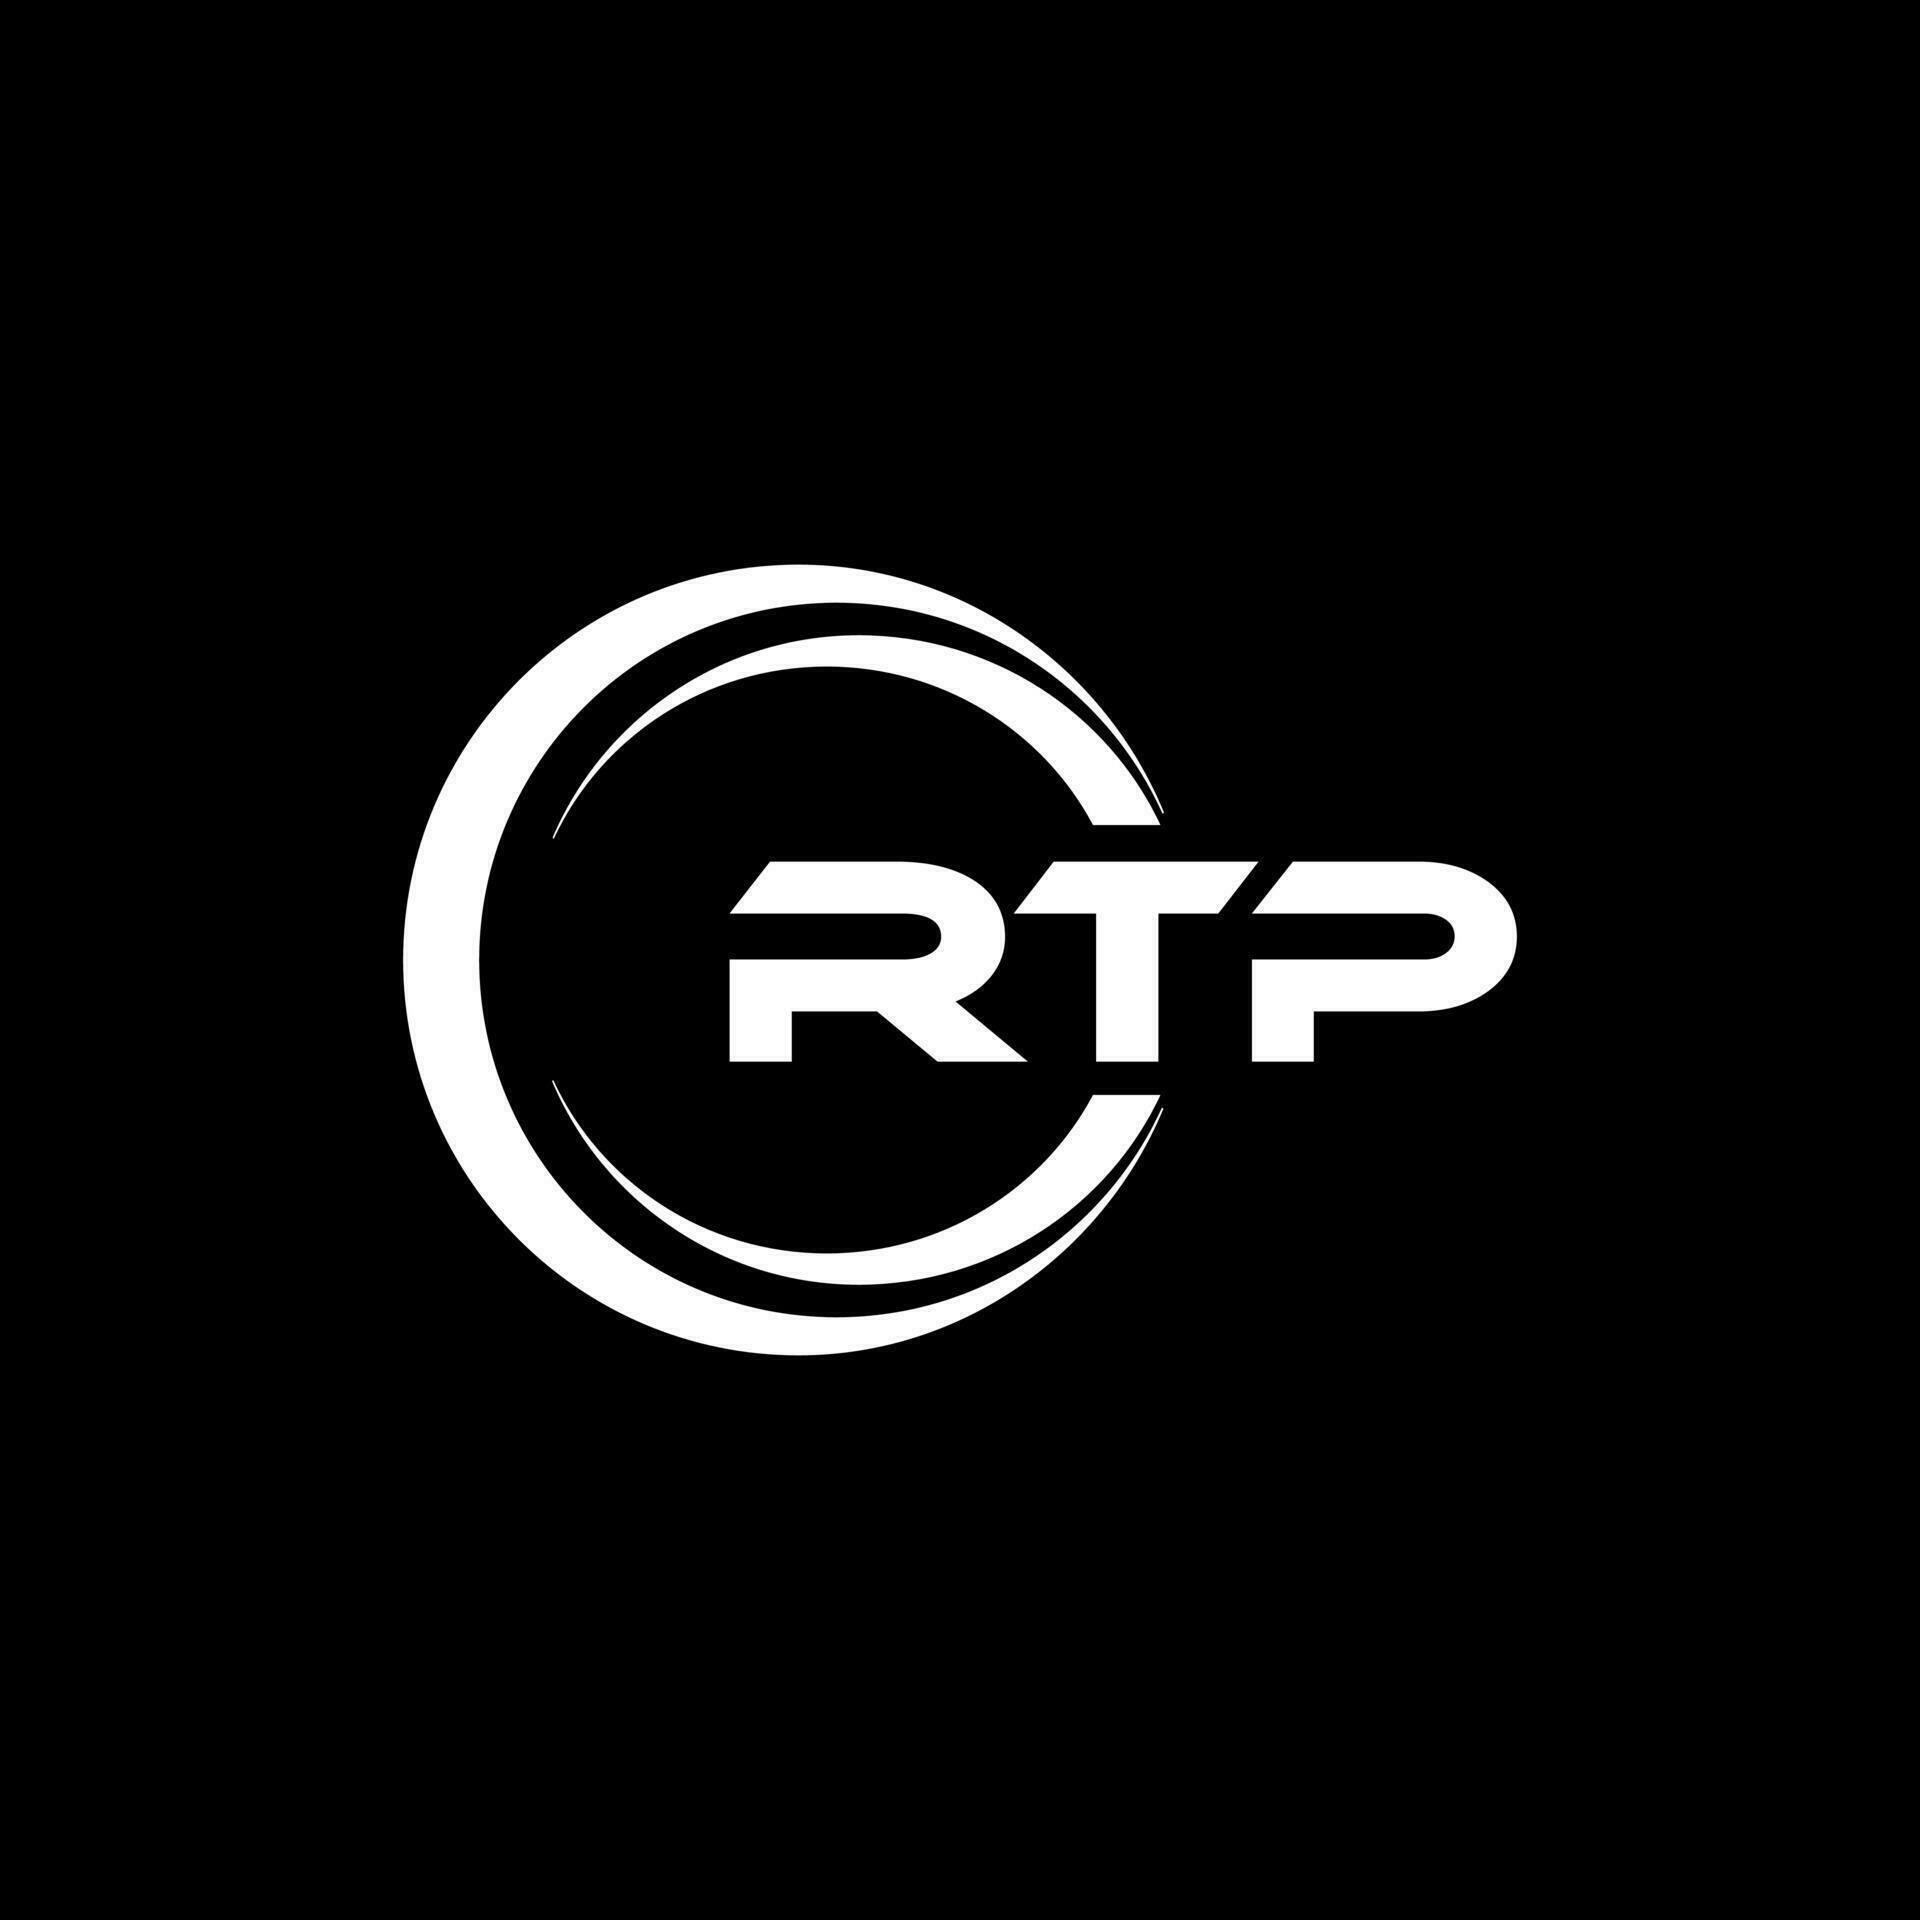 RTP Logo Design, Inspiration for a Unique Identity. Modern Elegance and ...